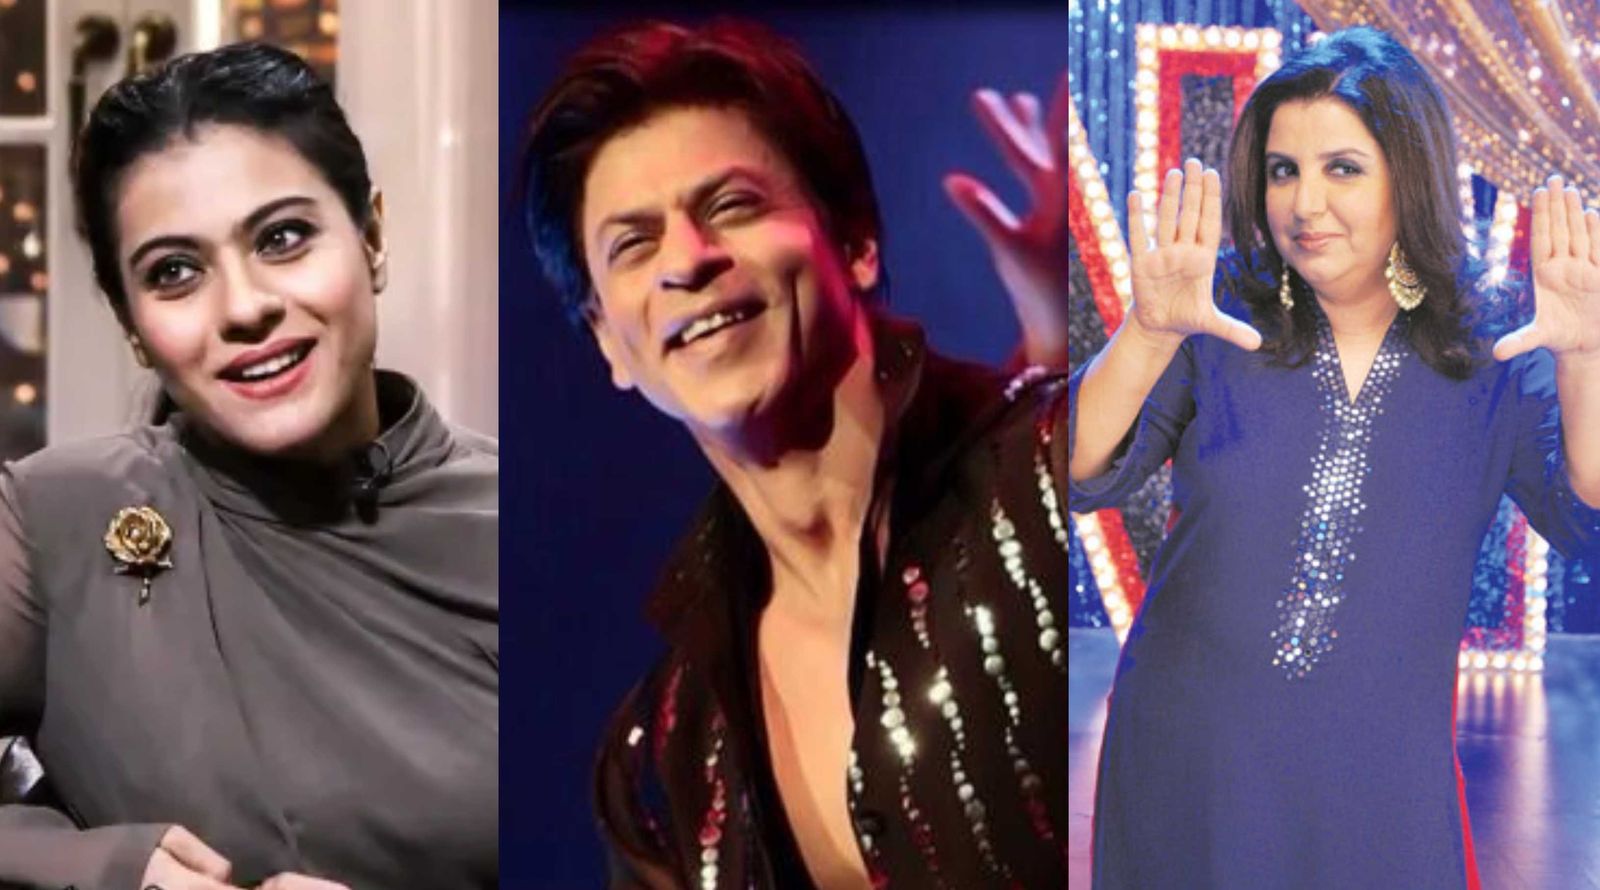 Shah Rukh Khan, Kajol and Farah Khan to turn judges for Jhalak Dikhhla Jaa season 10? Here’s what we know